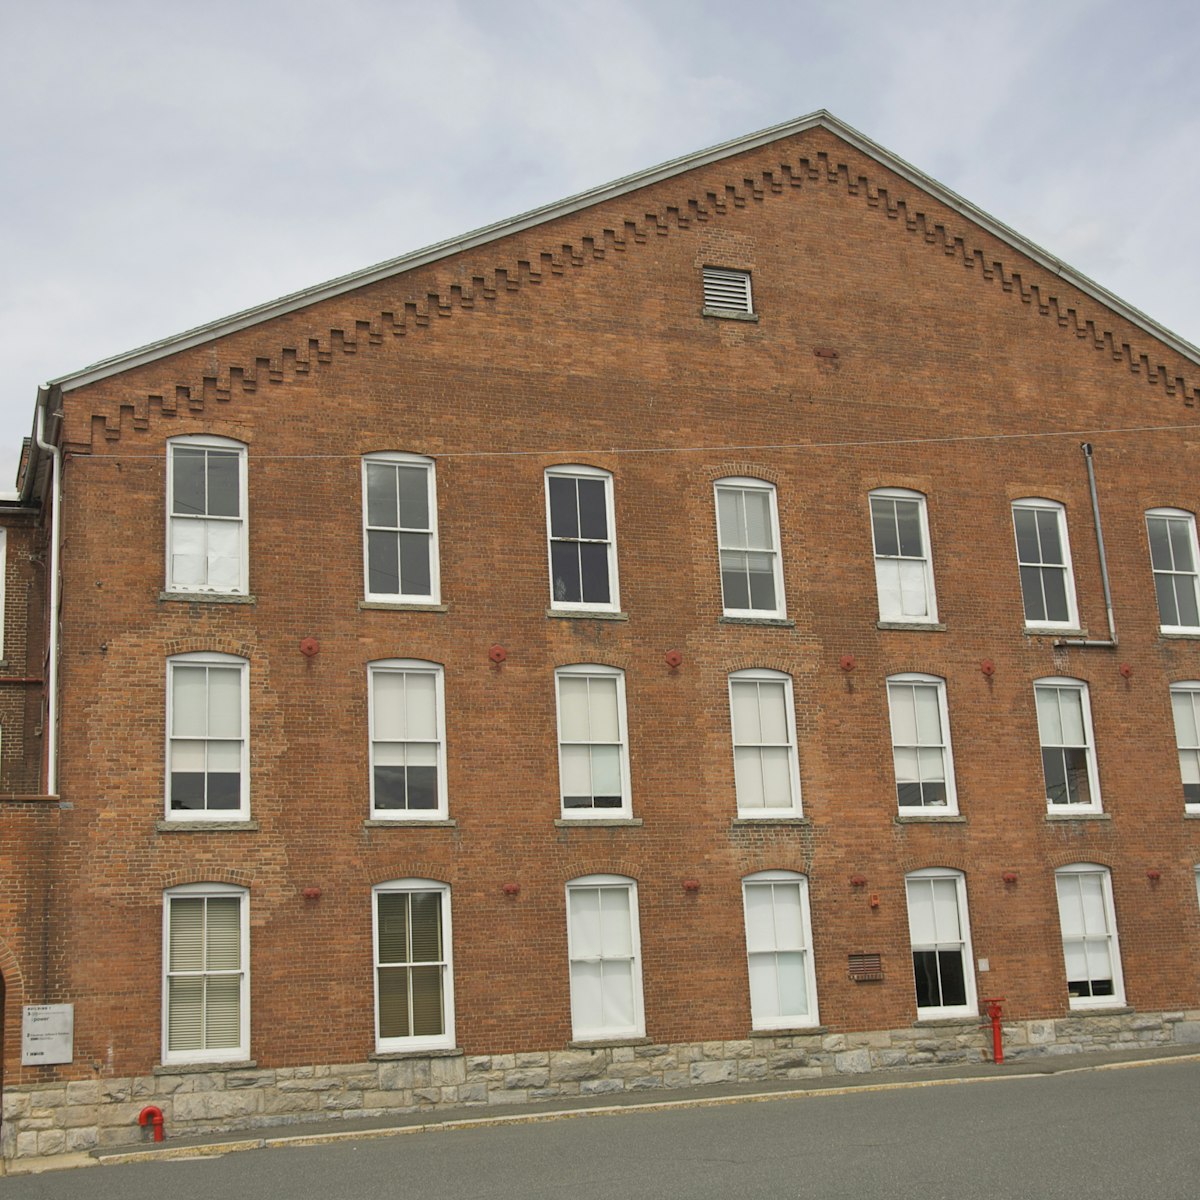 Facade of renovated warehouse building, MASS MoCA, Massachusetts Museum of Contemporary Art, North Adams, The Berkshires, Massachusetts